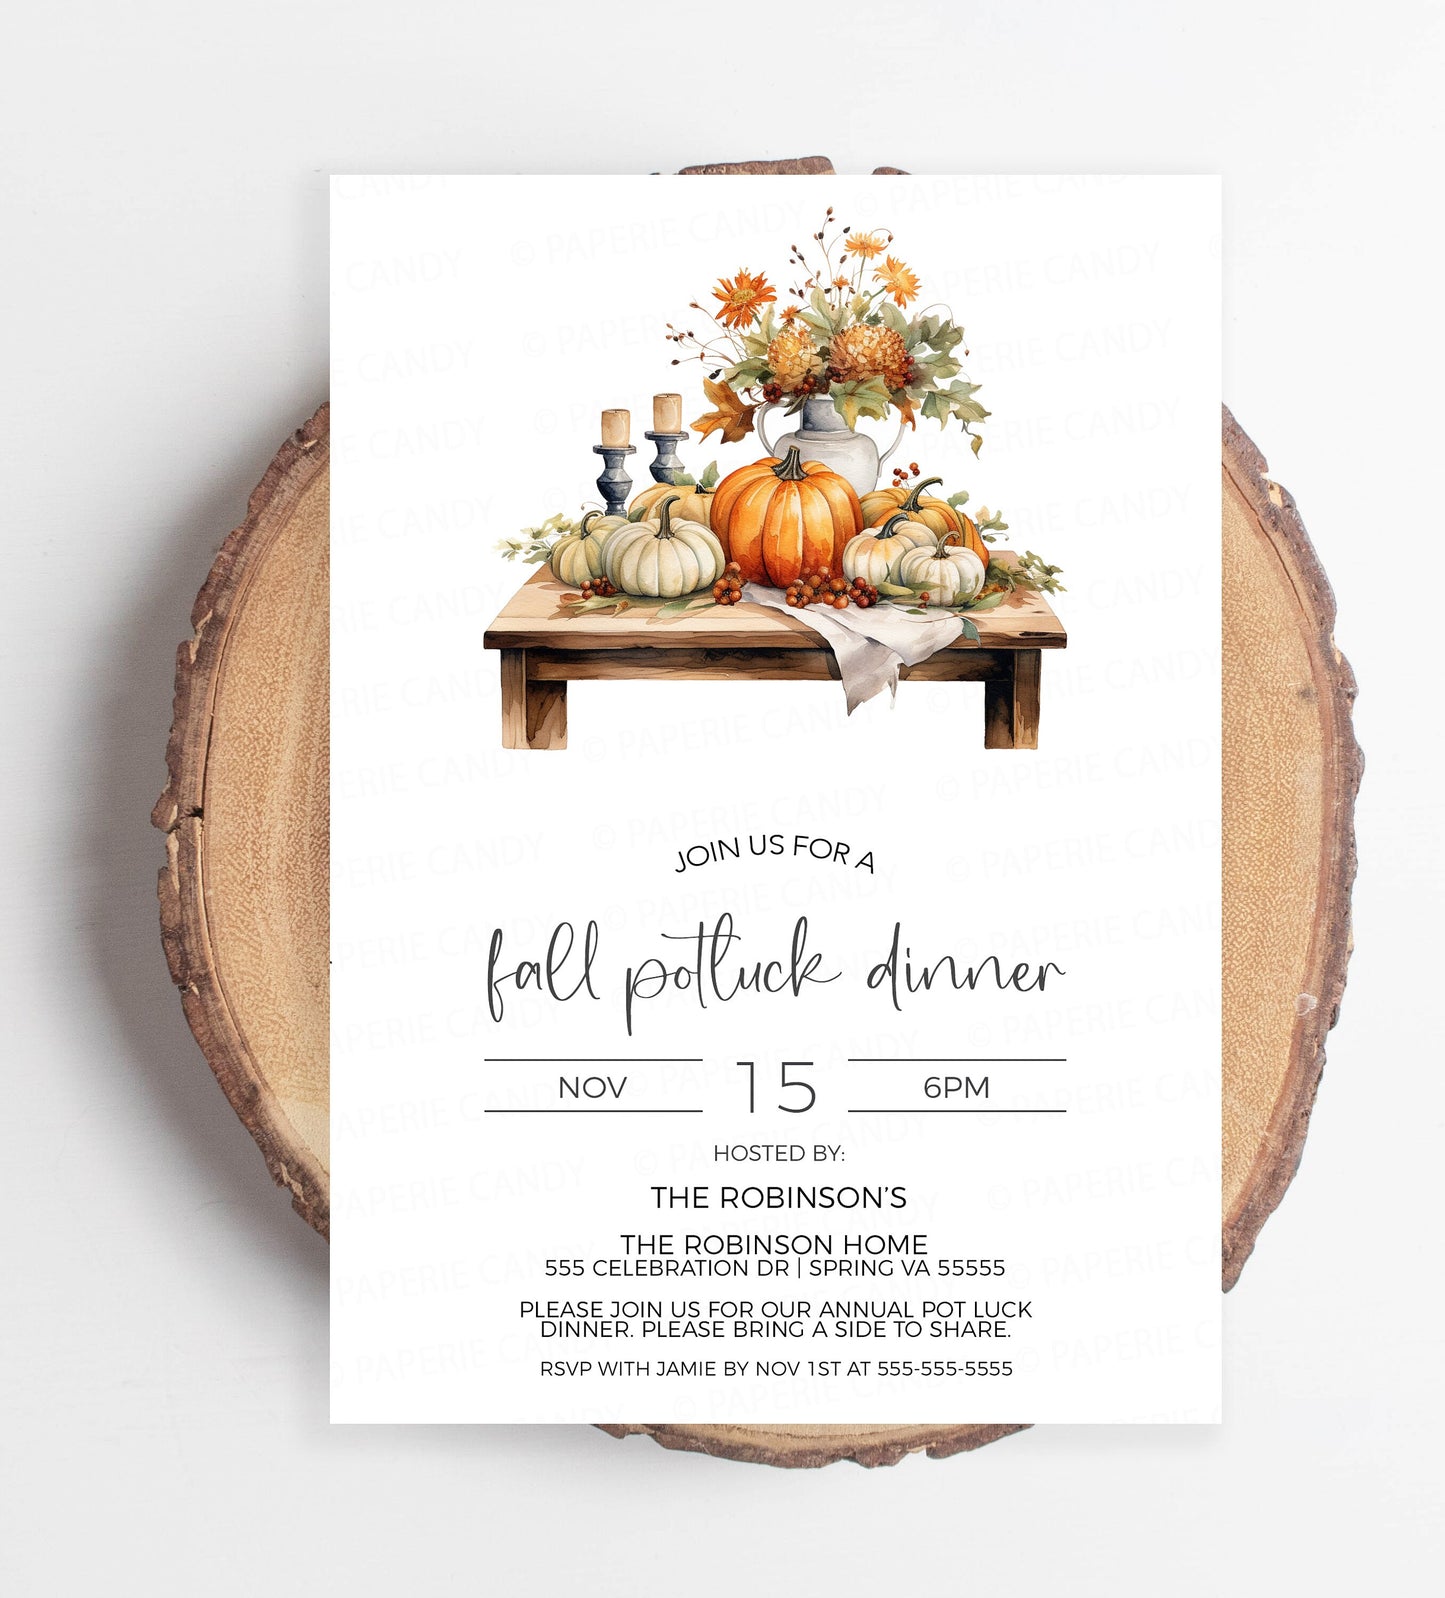 Fall Potluck Invitation, Thanksgiving Potluck Invite, Autumn Dinner Brunch Lunch, Church Company Business Potluck, Printable Template